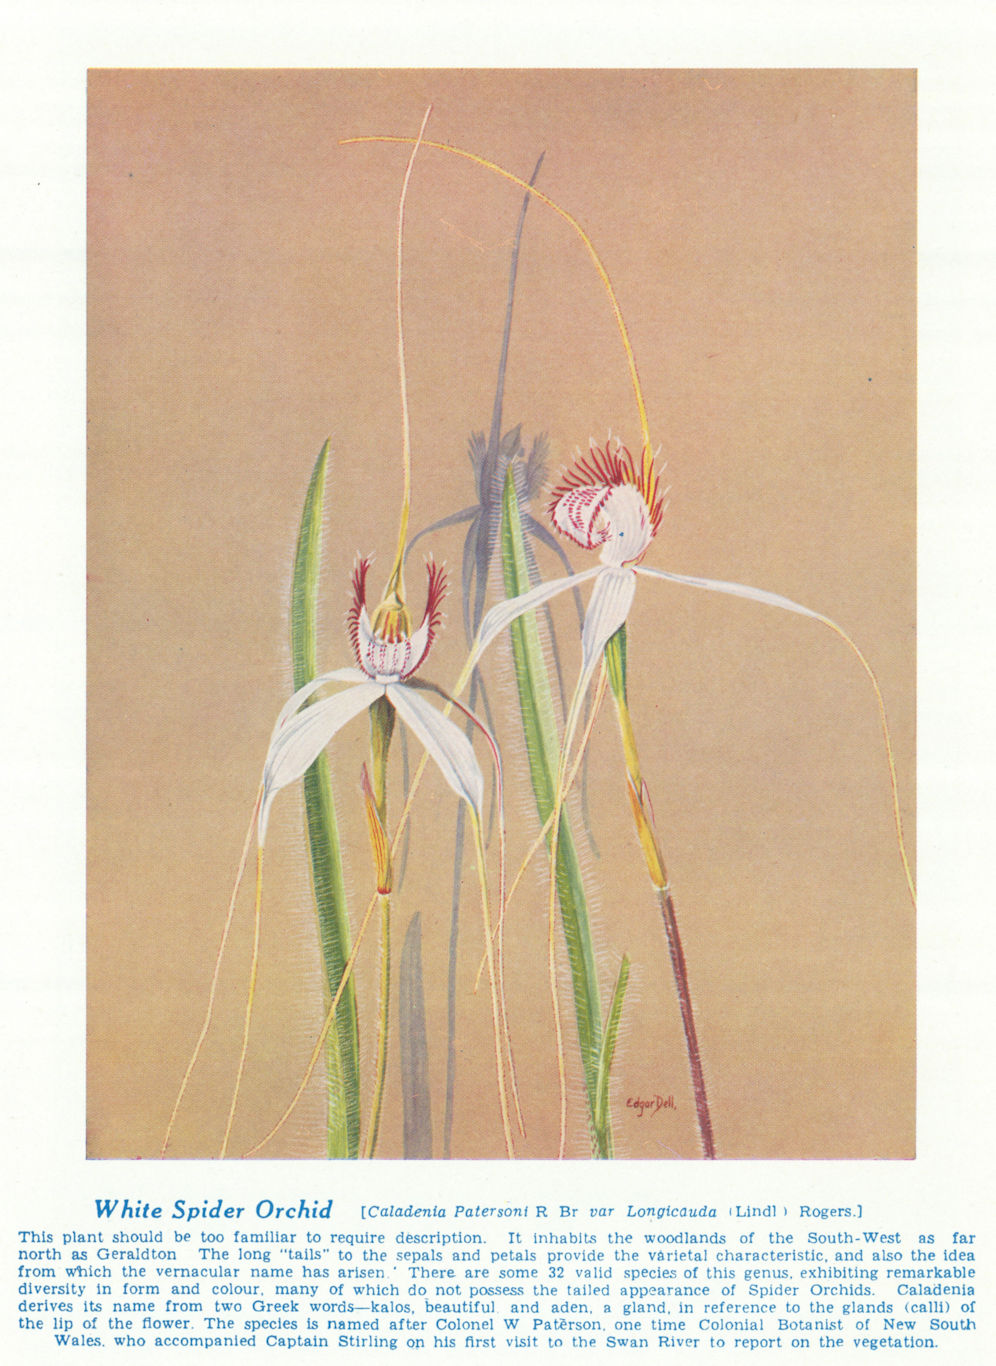 White Spider Orchid (Caladenia Patersoni). West Australian Wild Flowers 1950